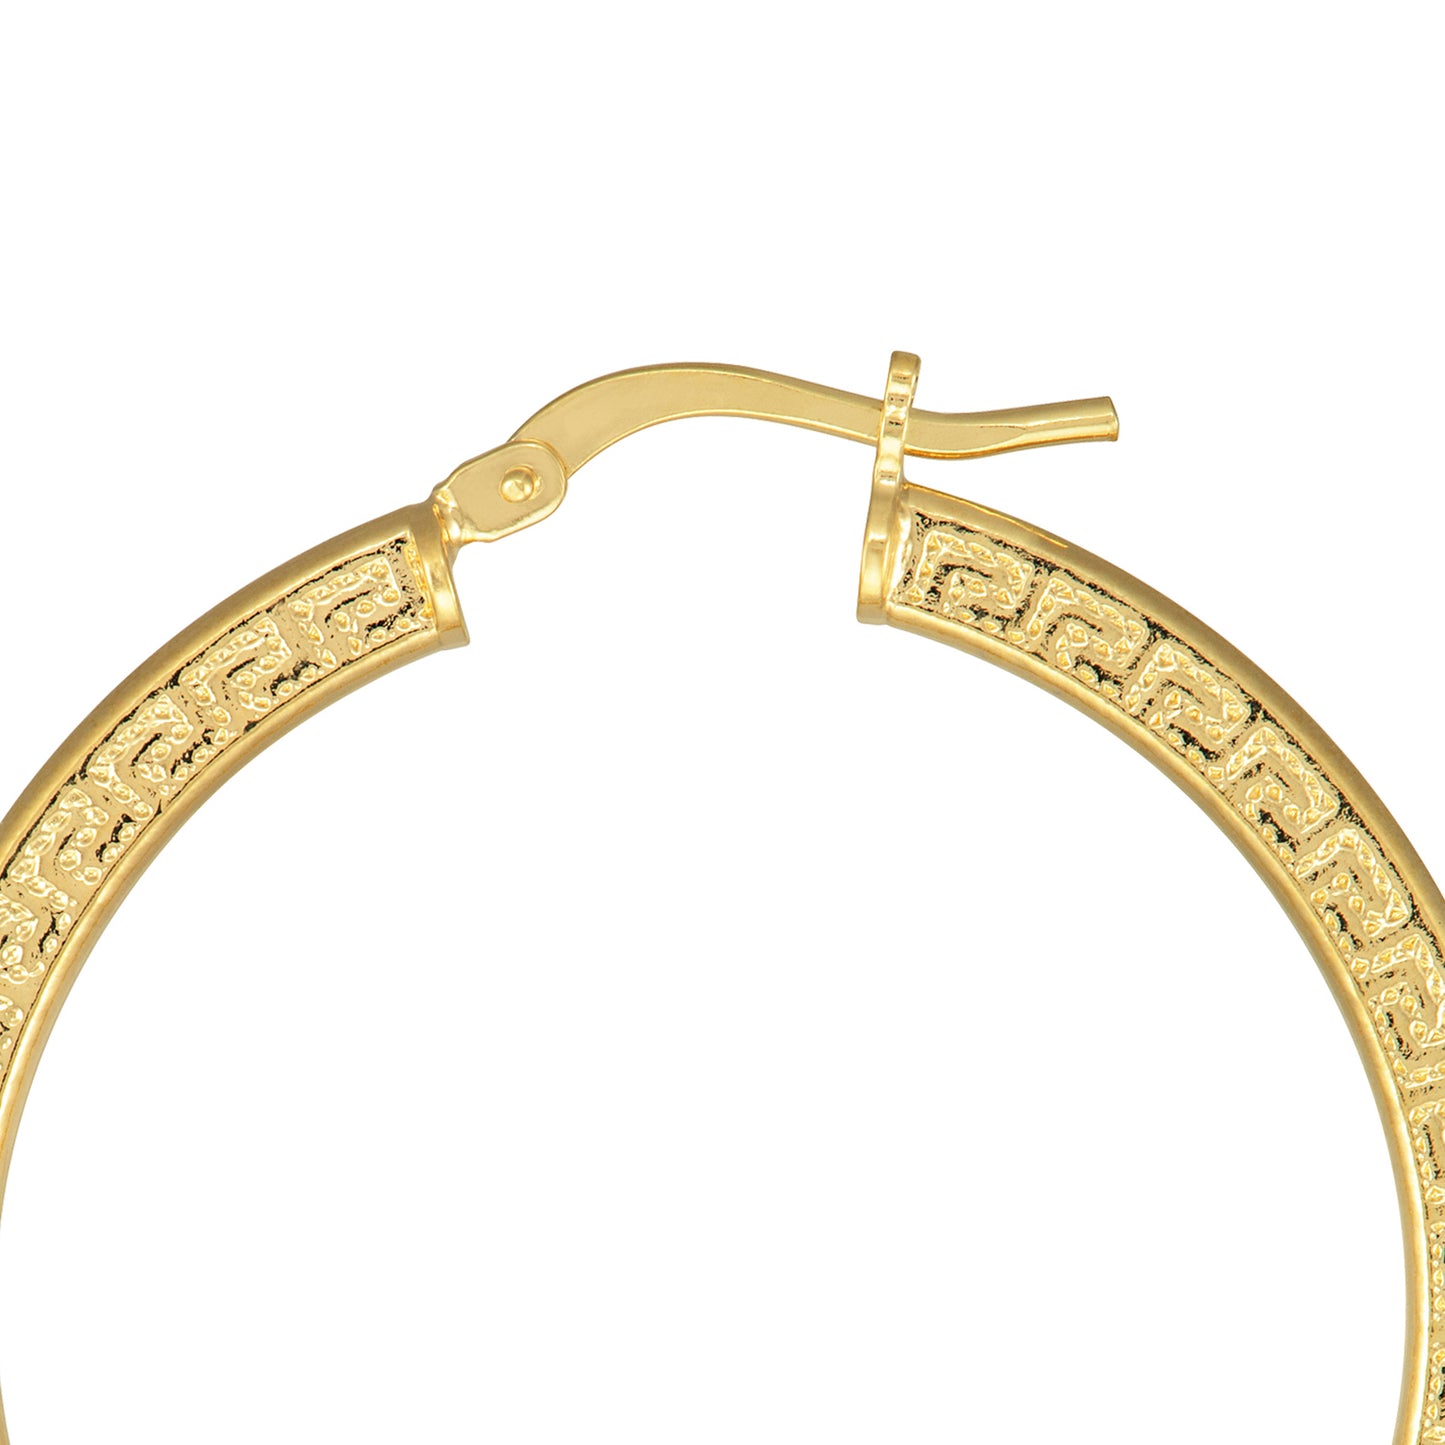 Yellow Gold plated Greek Key Hoop Earrings